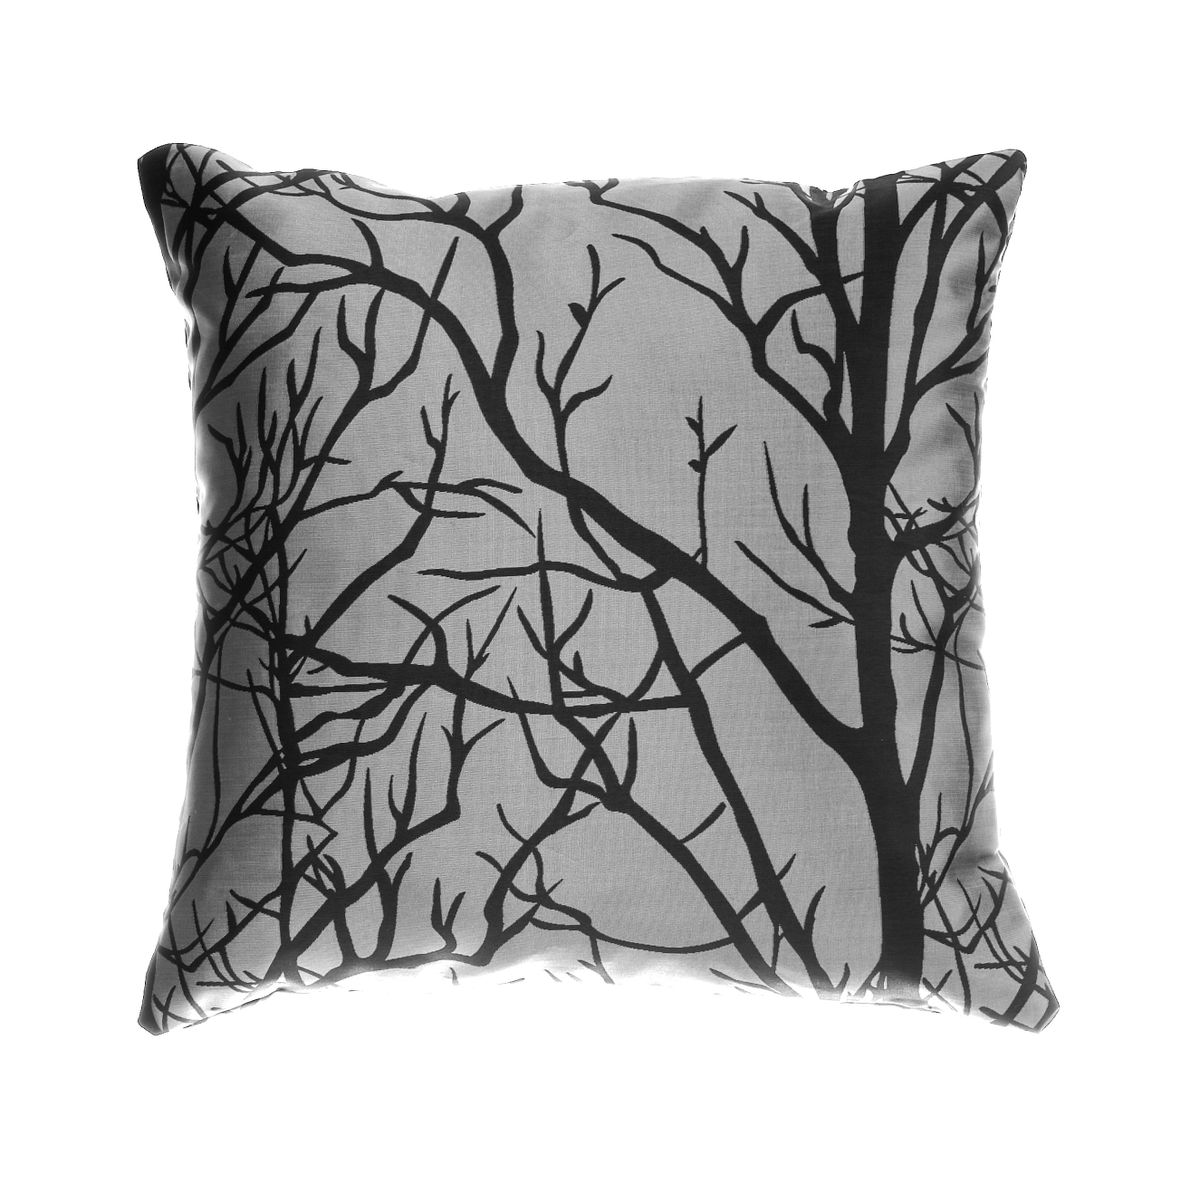 Gothic Edgar Allan Poe Decorative Throw Pillows